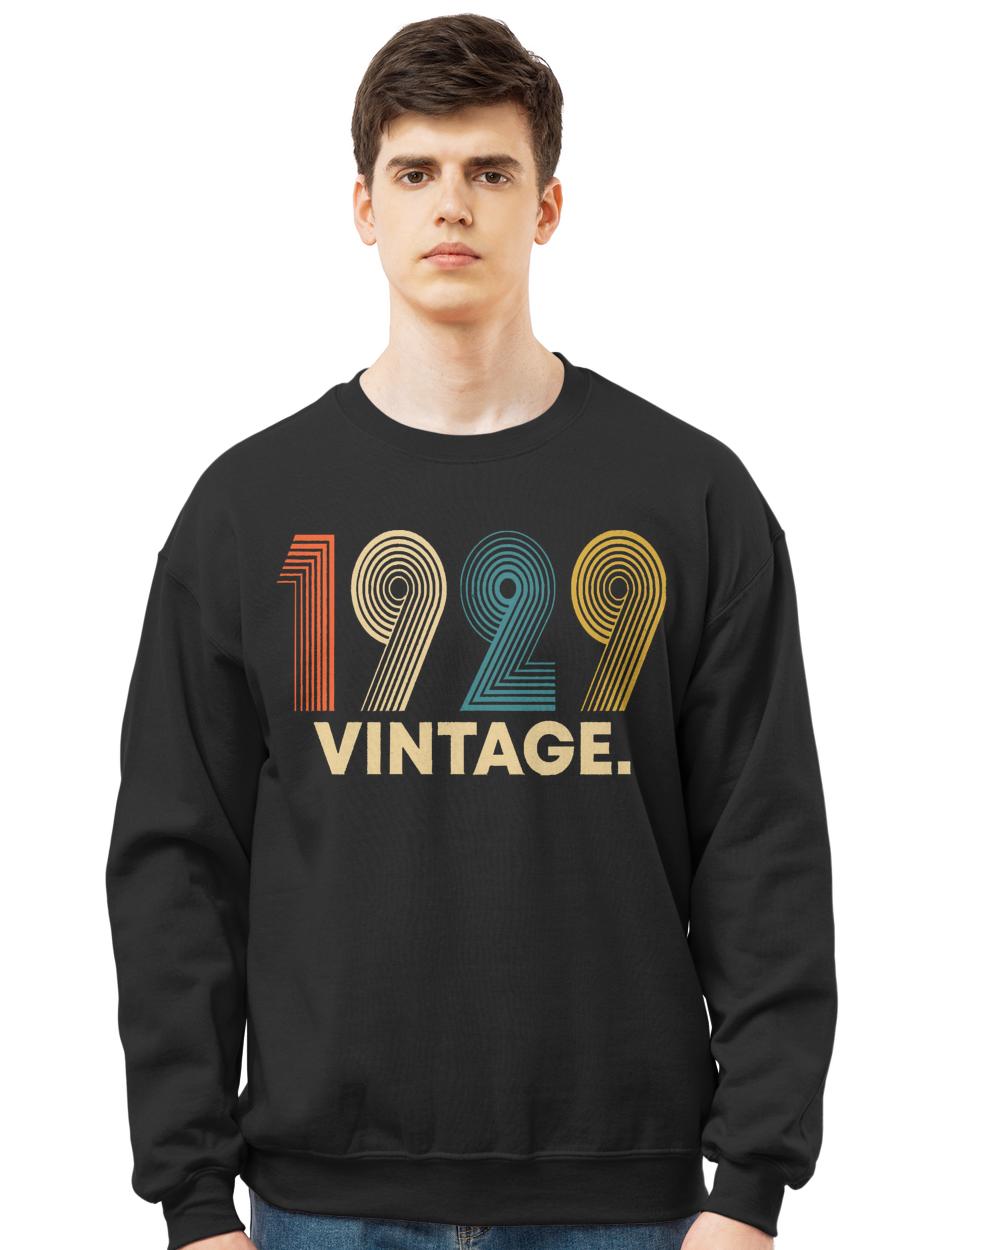 1929 Vintage T-Shirt1929 Vintage T-Shirt